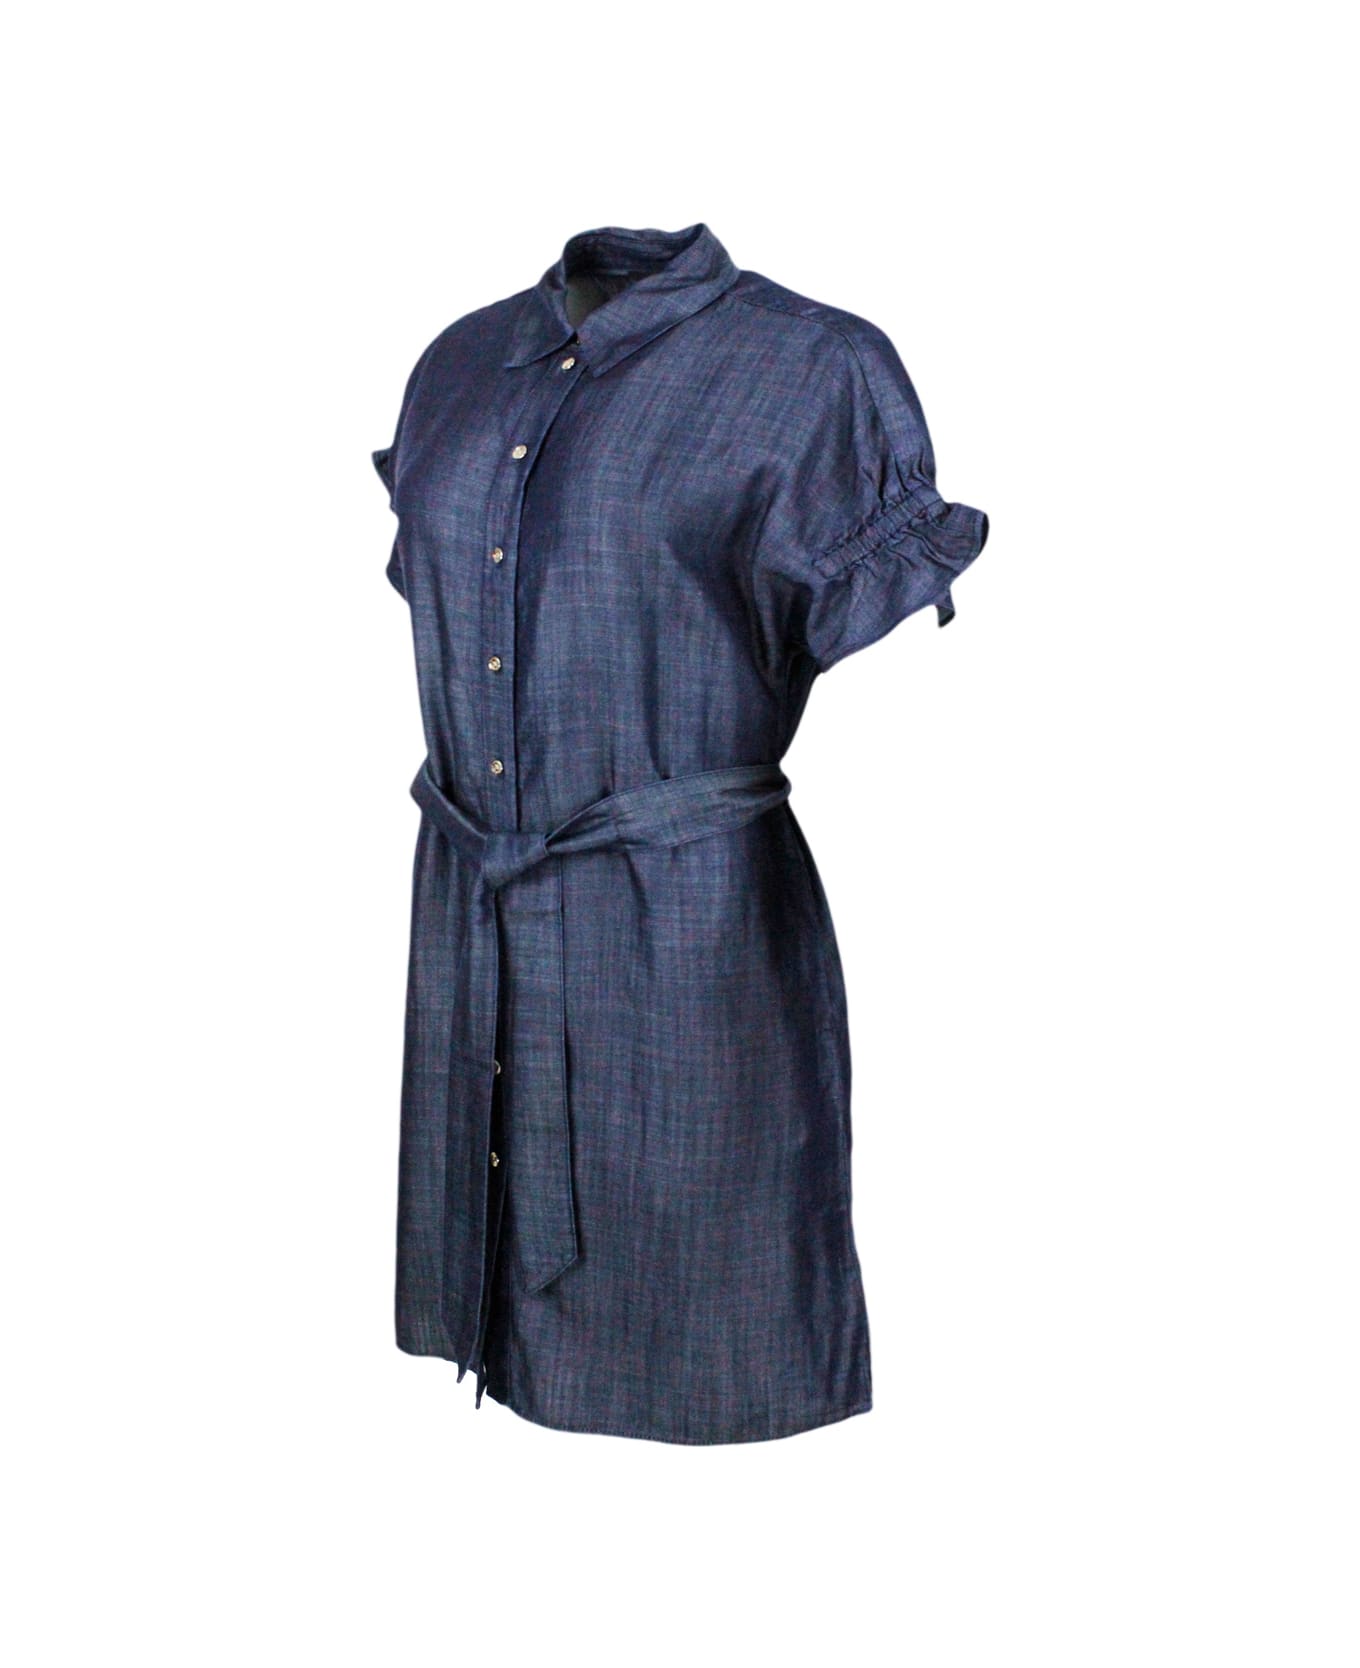 Armani Collezioni Lightweight Denim Dress With Gathered Sleeves With Button Closure And Belt Supplied - Denim Dark